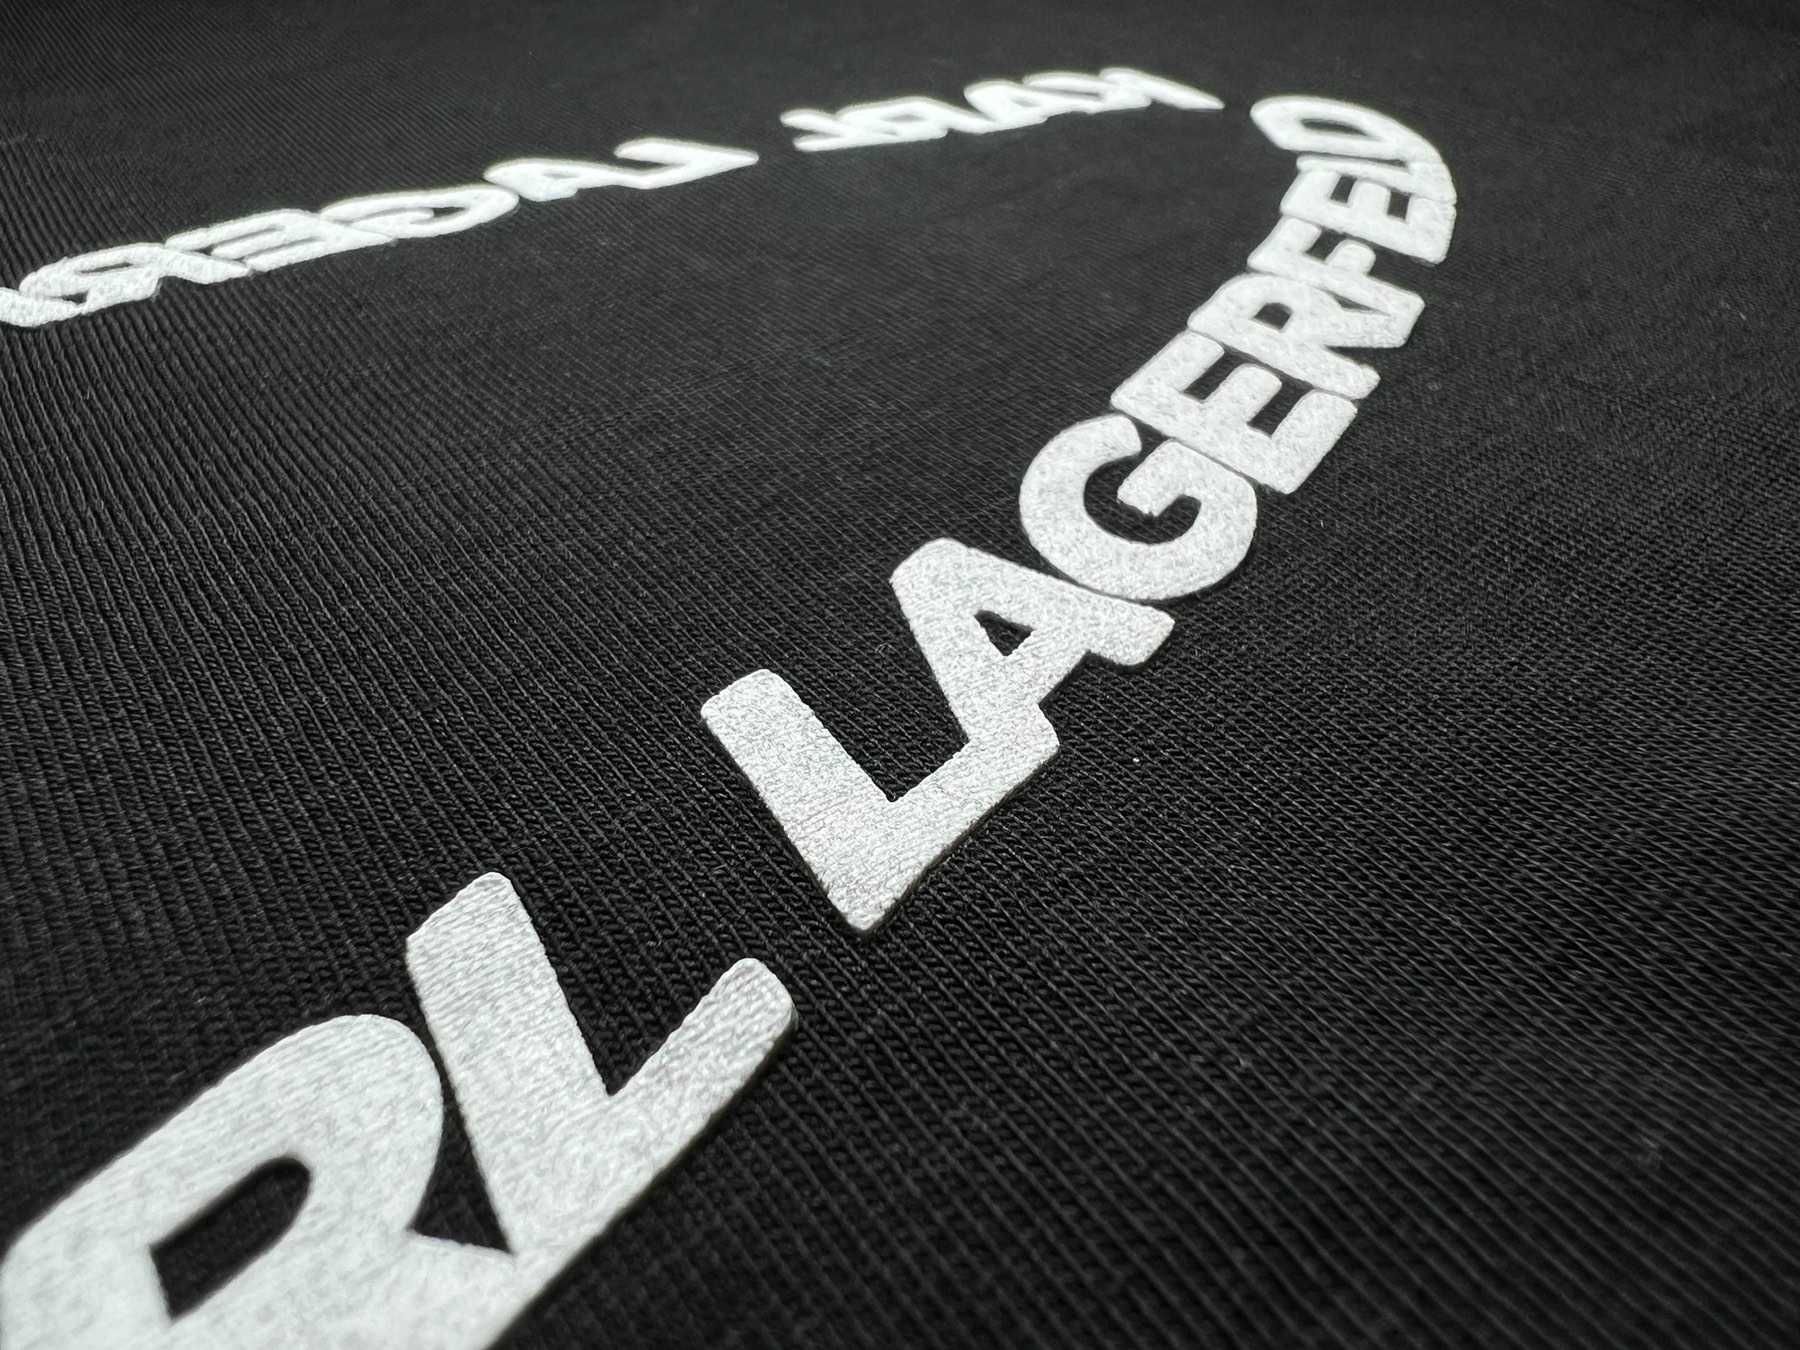 Karl Lagerfeld Mars тениска черна и бяла - НОВ Модел S M L XL